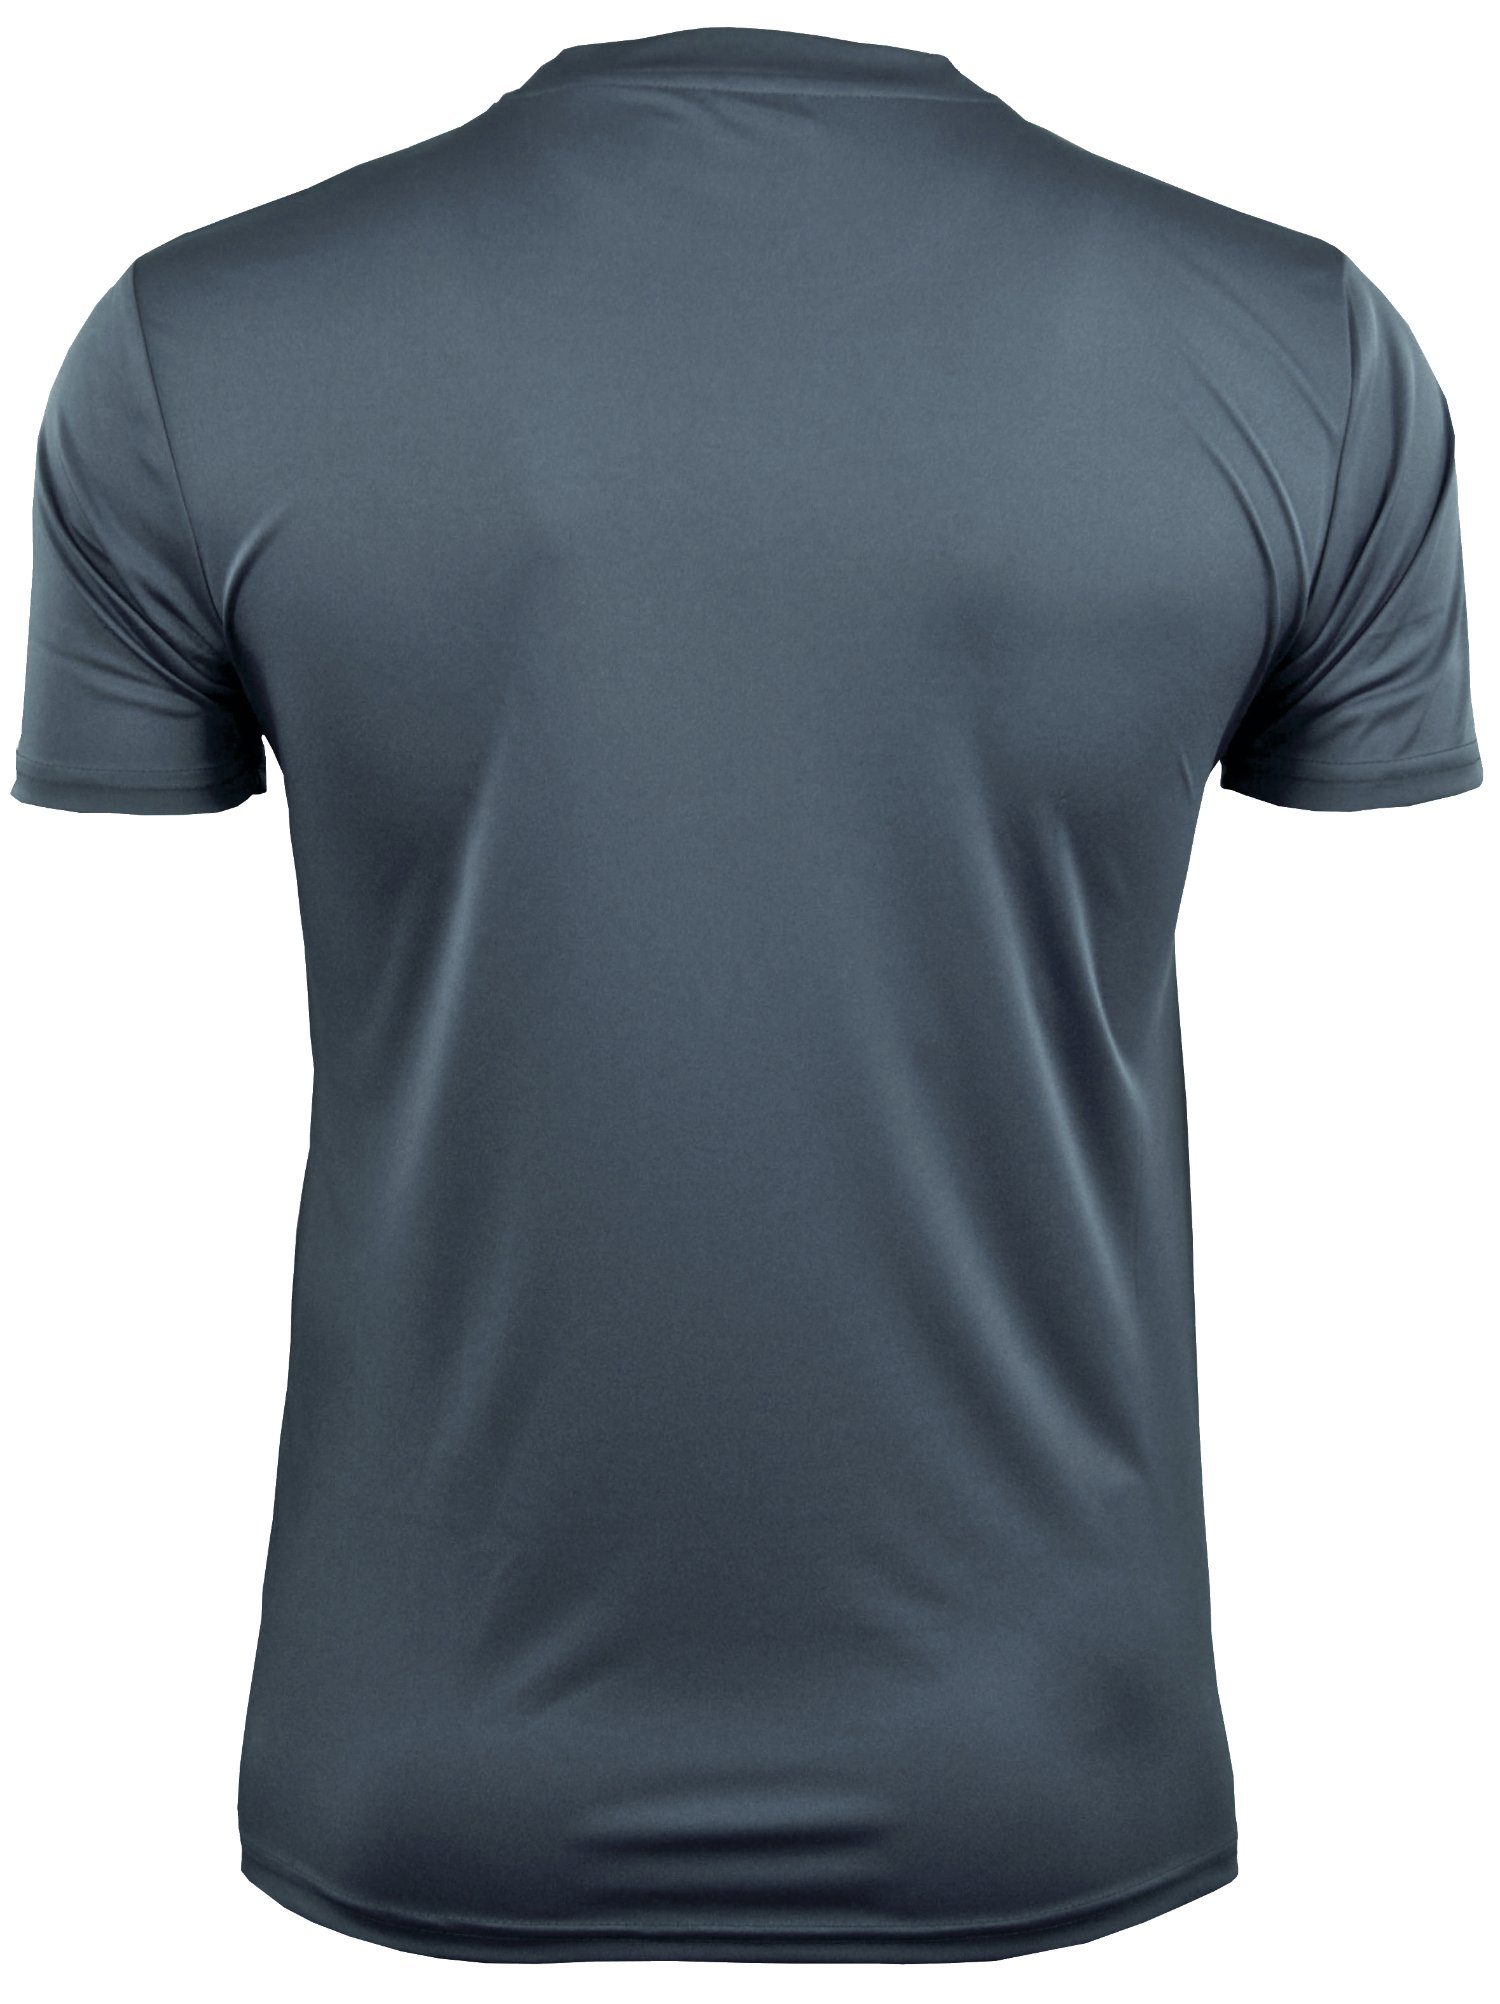 Unifarben, Mountain Herren T-Shirt Kurzarm GUGGEN Dunkelgrau-OHNE-Logo FW04 in Funktionsshirt Funktionsshirt Logo Sportshirt